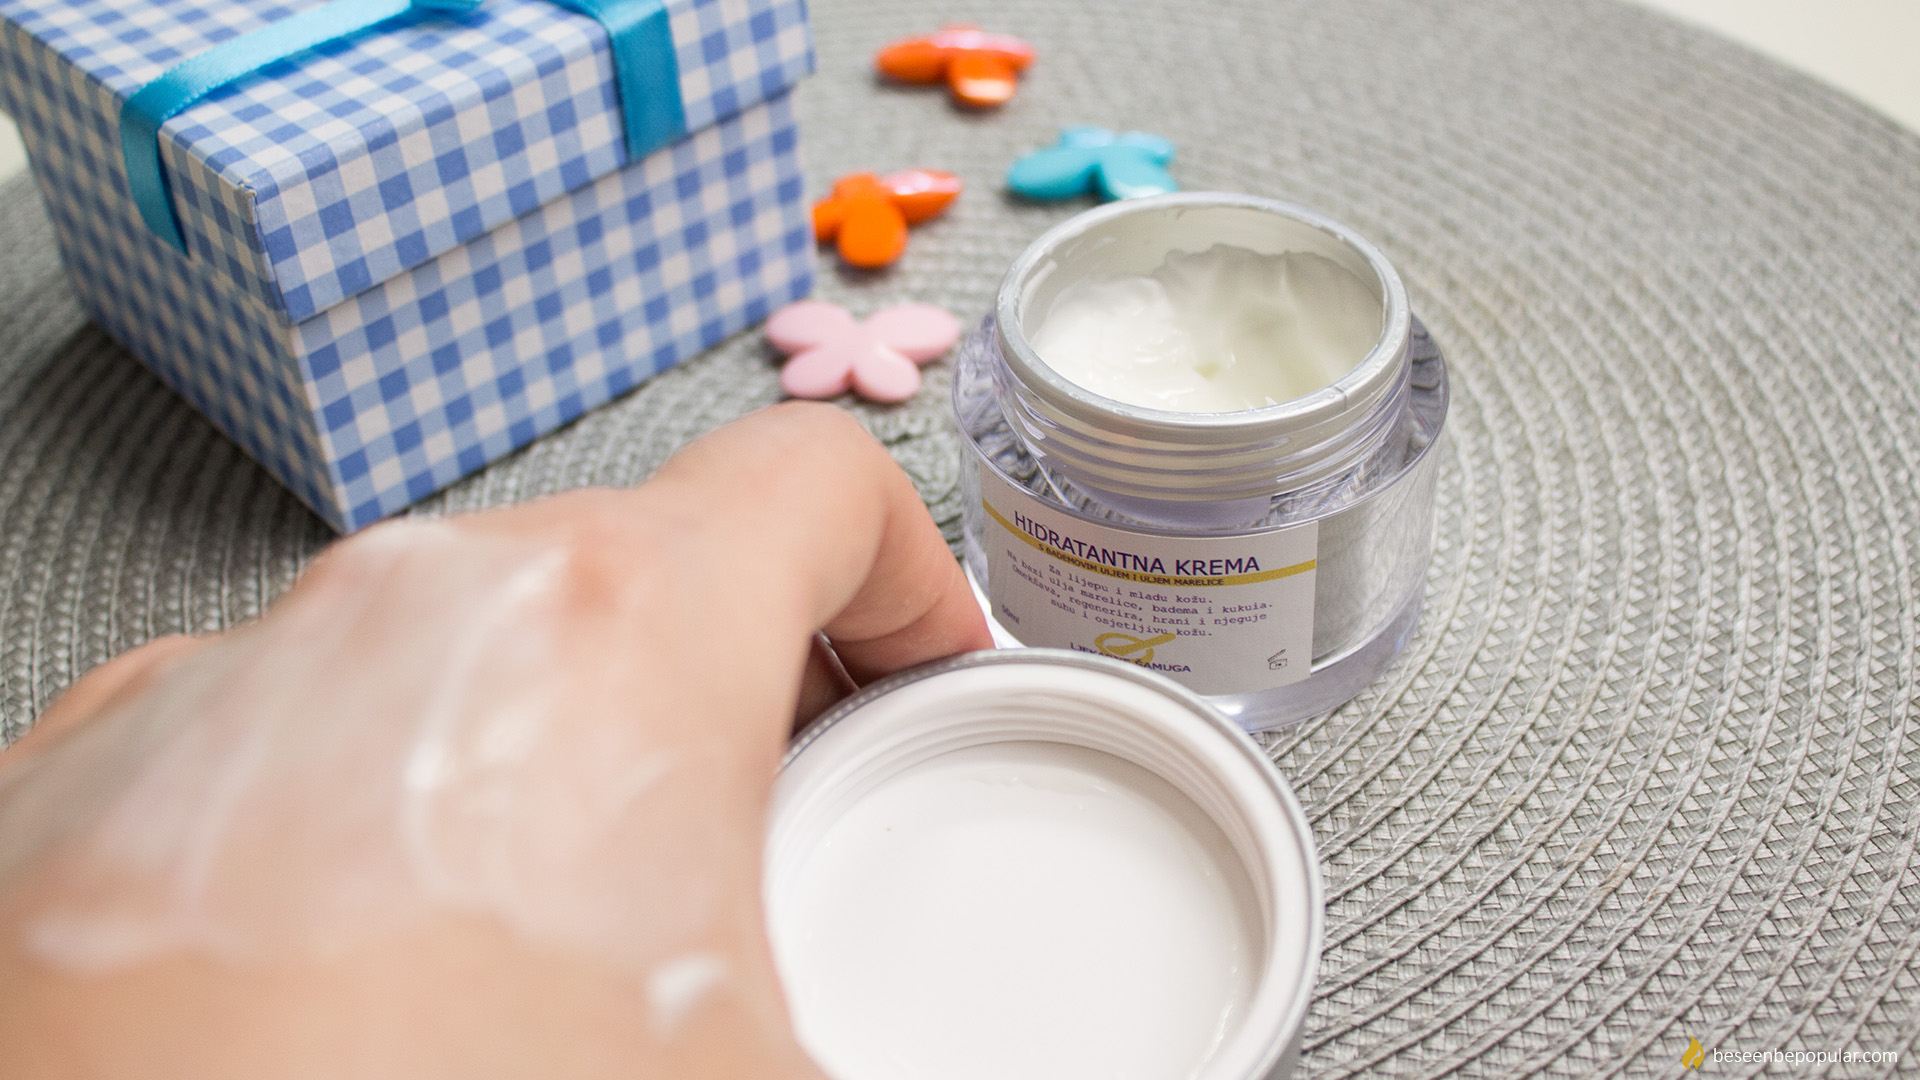 The key to good looks - moisturizing cream